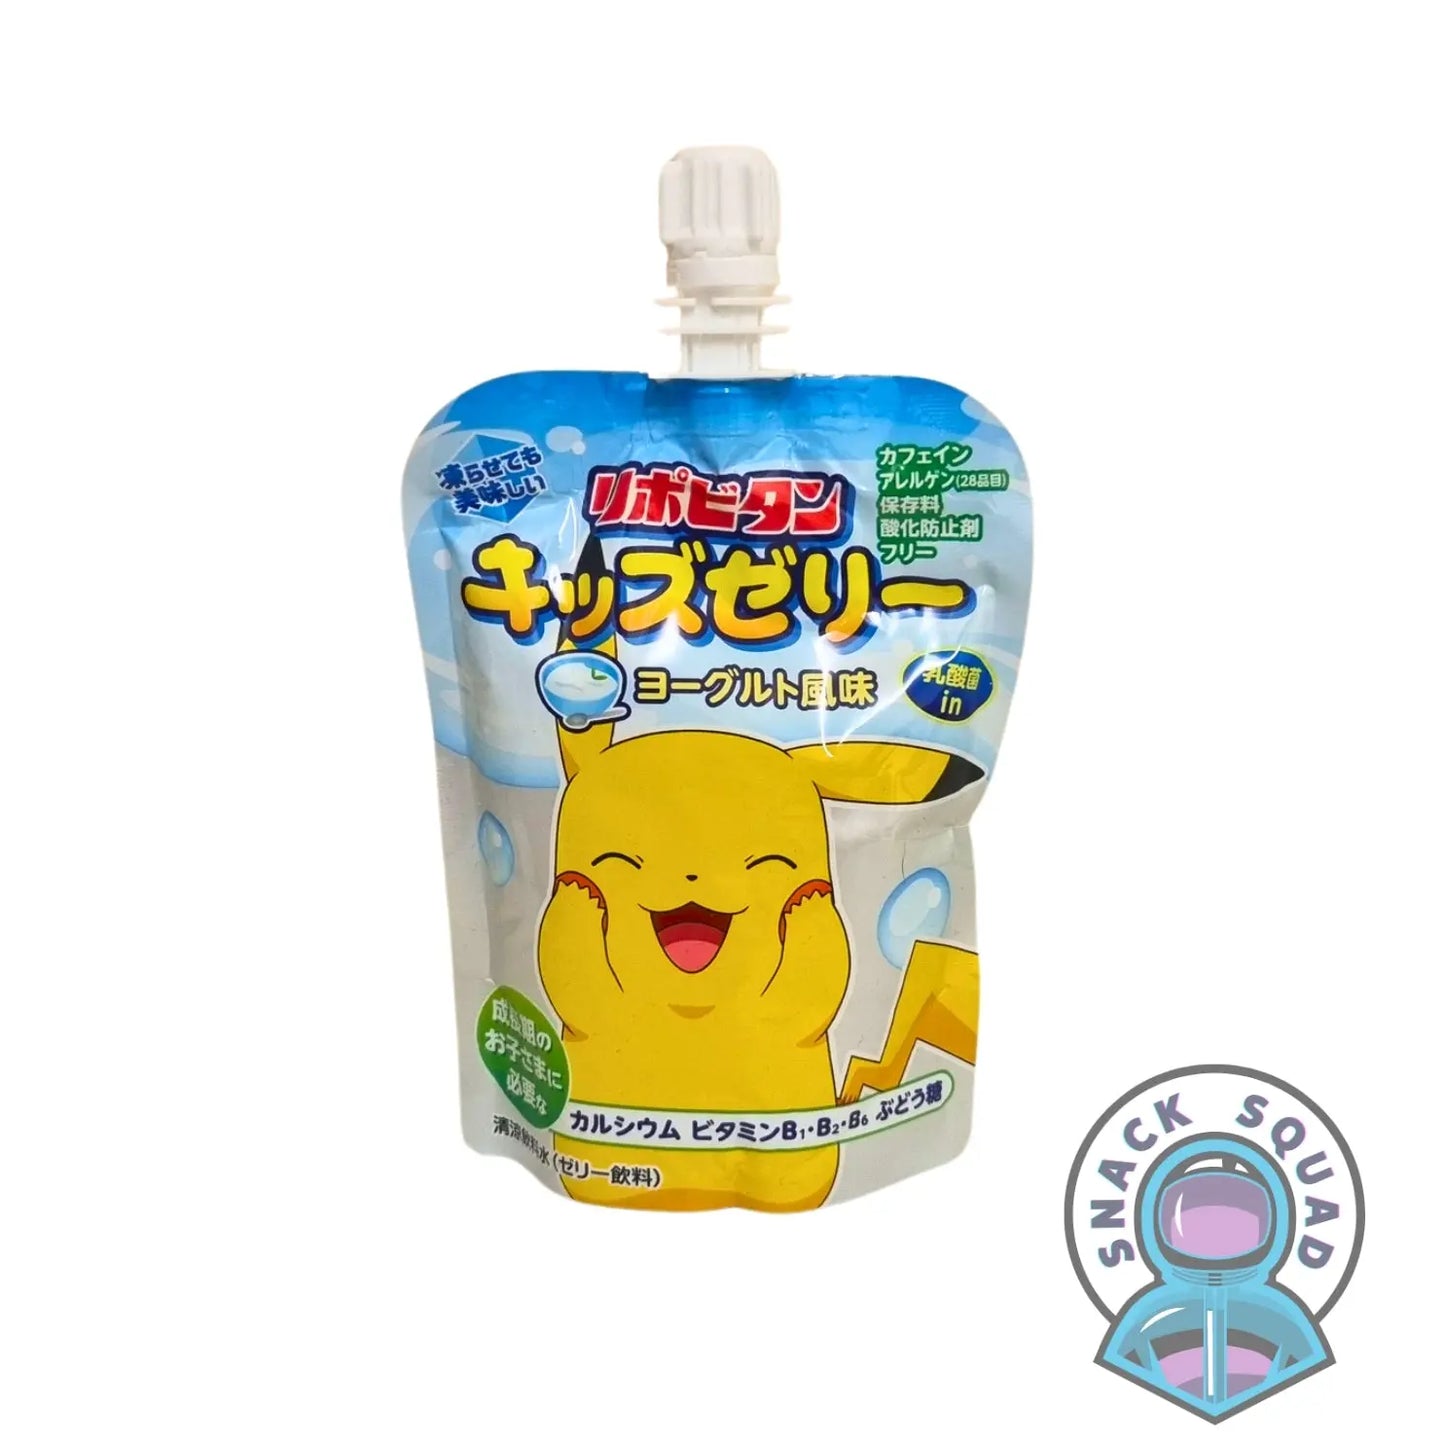 Taisho Pokemon Lipovitan Jelly Yogurt 125g (Japan) Snack Squad